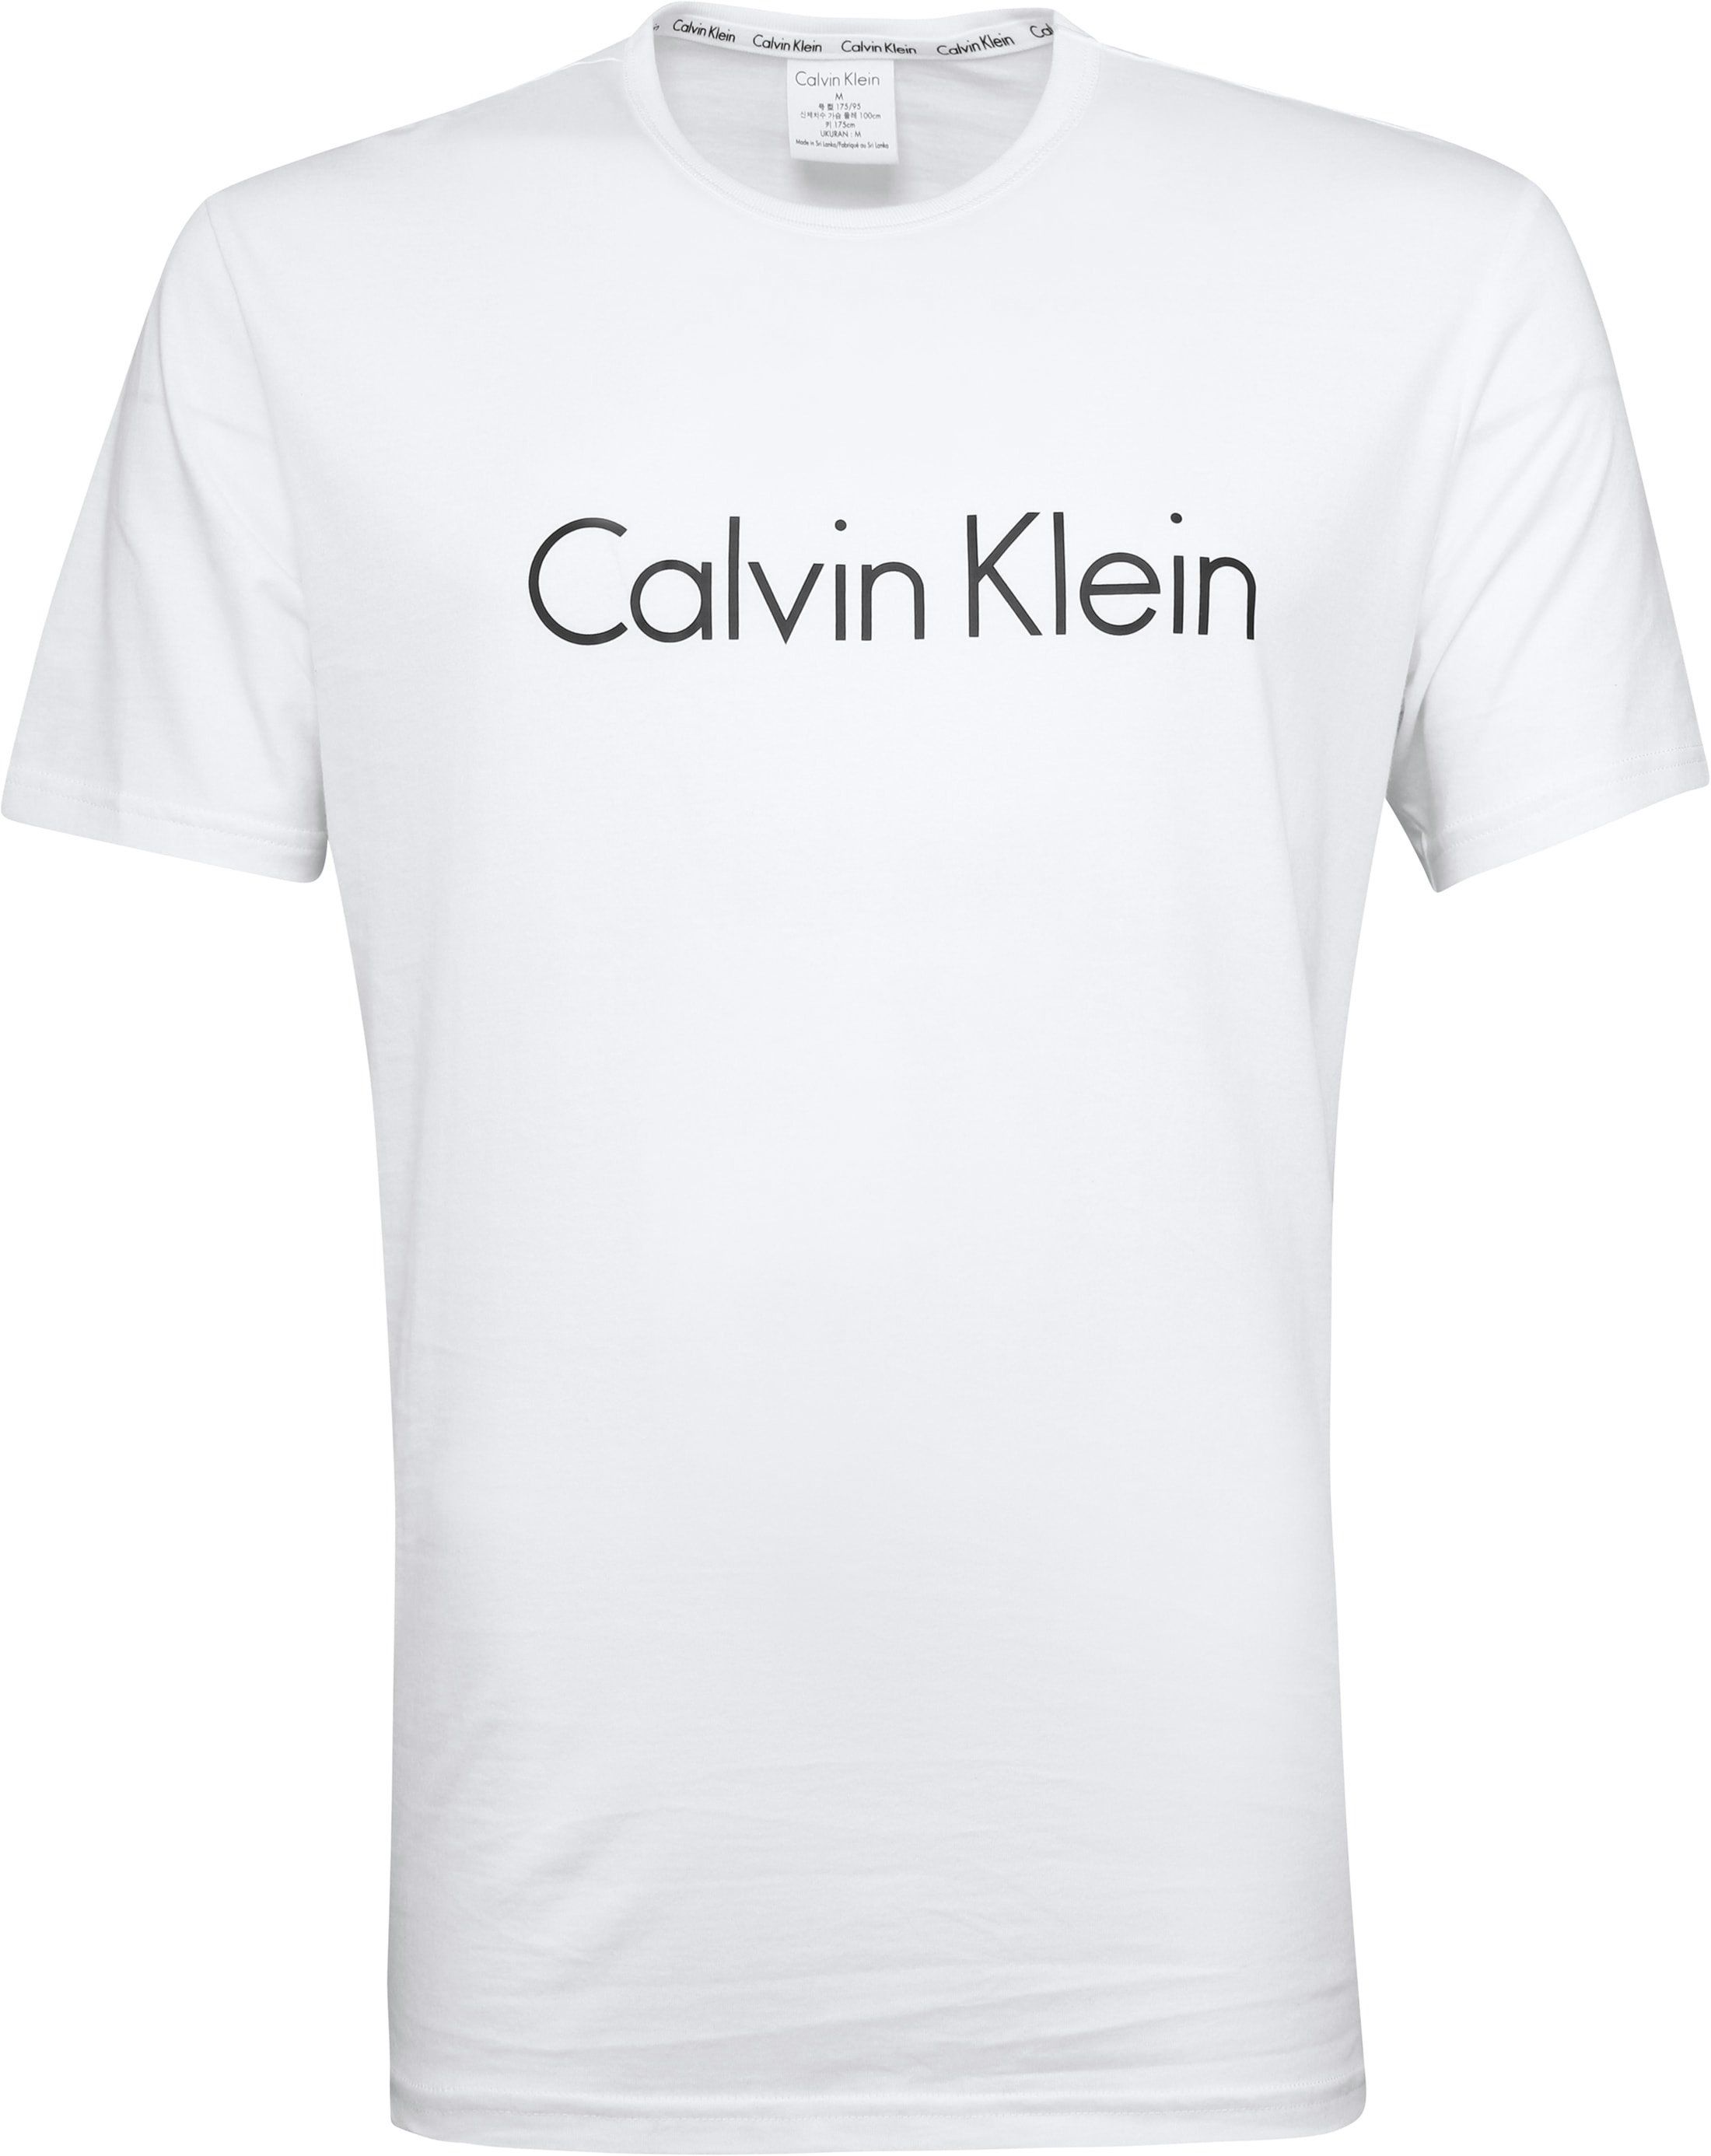 Calvin Klein T-Shirt Logo White size L